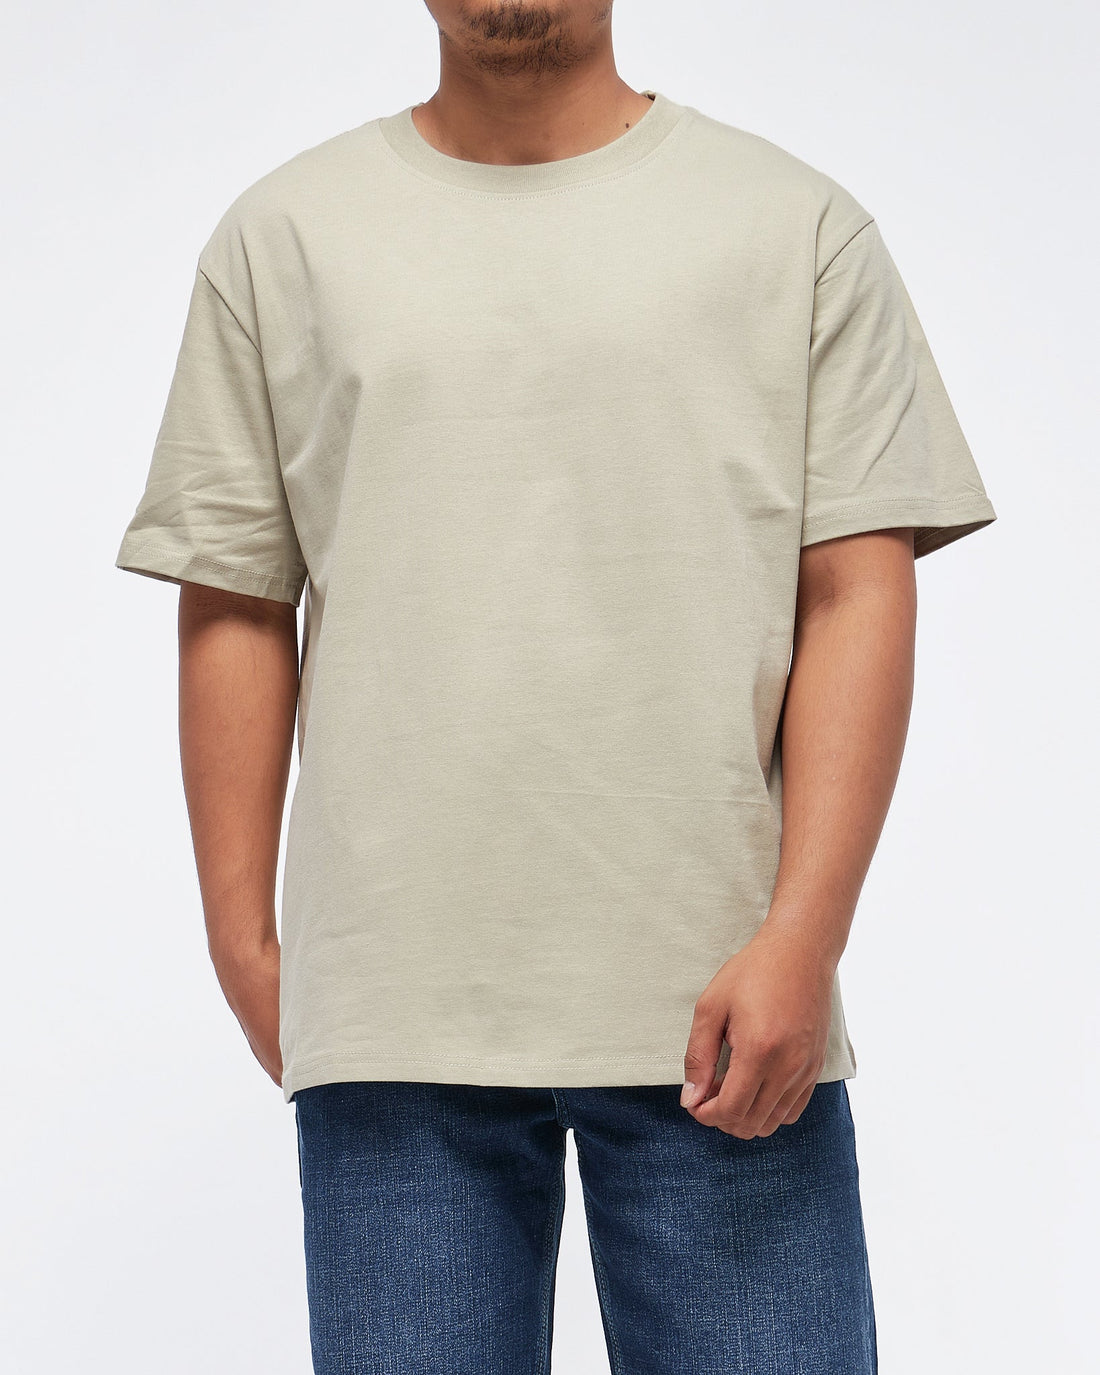 Monogram Bandana Men T-Shirt 65.90 - MOI OUTFIT